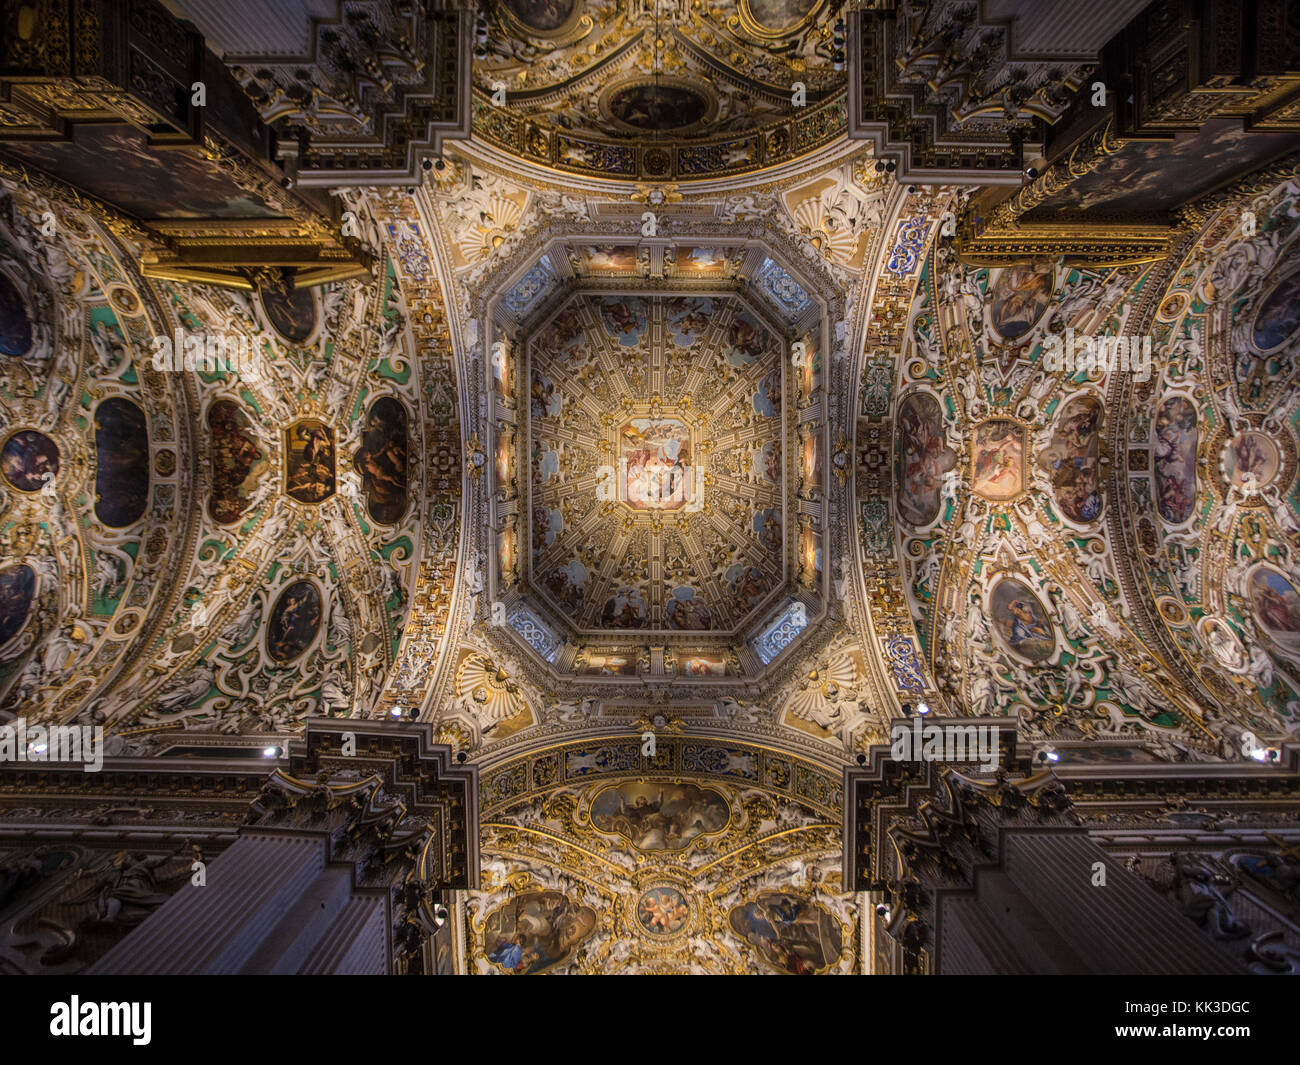 Ceiling of Basilica of Santa Maria Maggiore in Bergamo, Italy. Stock Photo